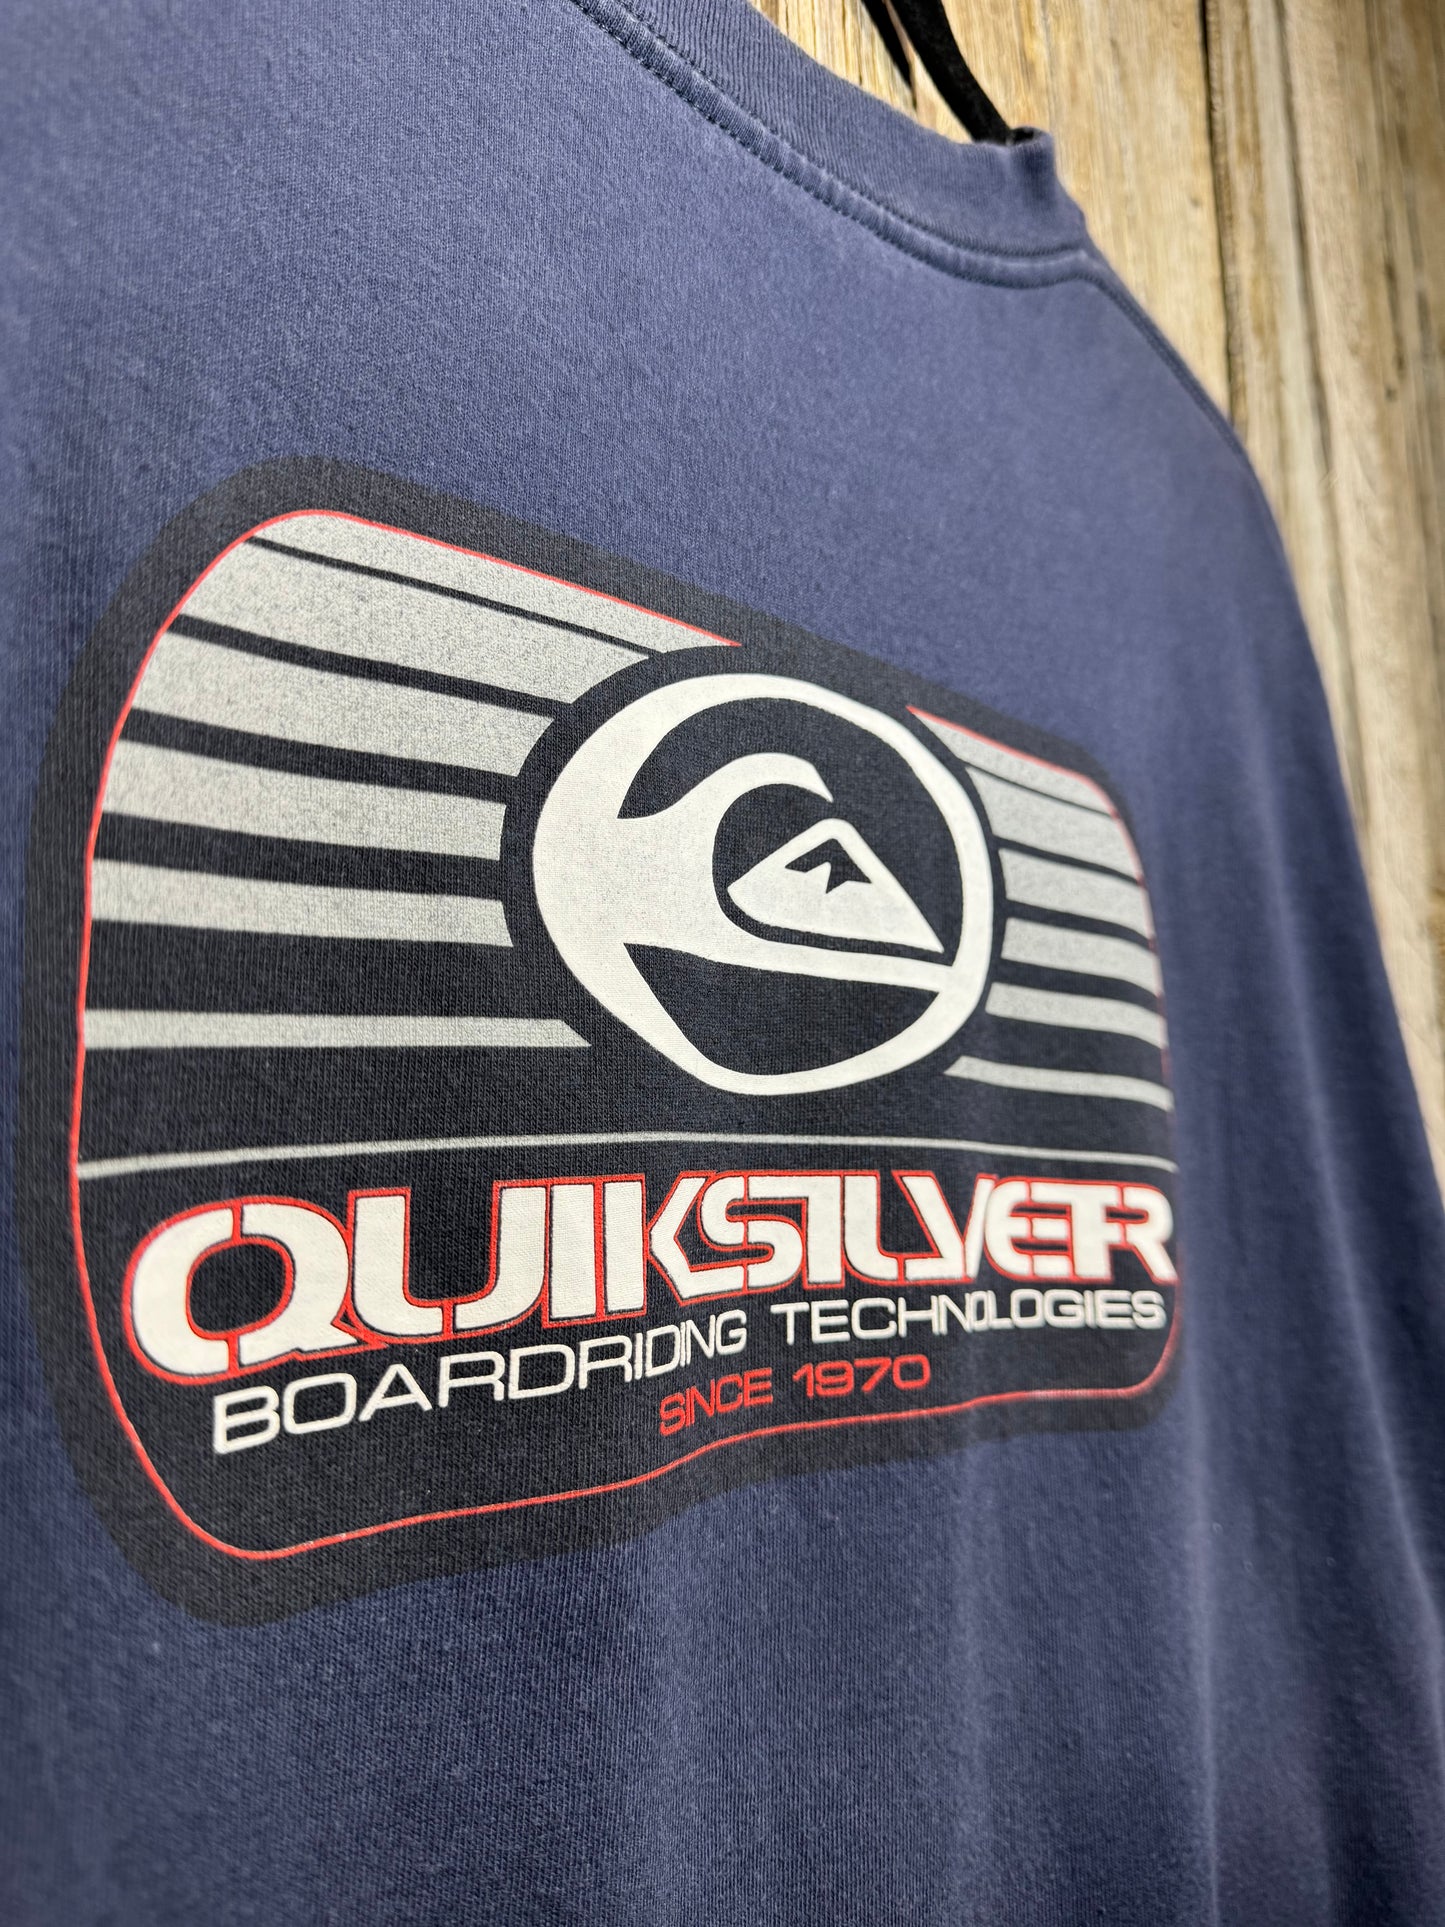 Vintage Quicksilver Board Technologies Longsleeve Top